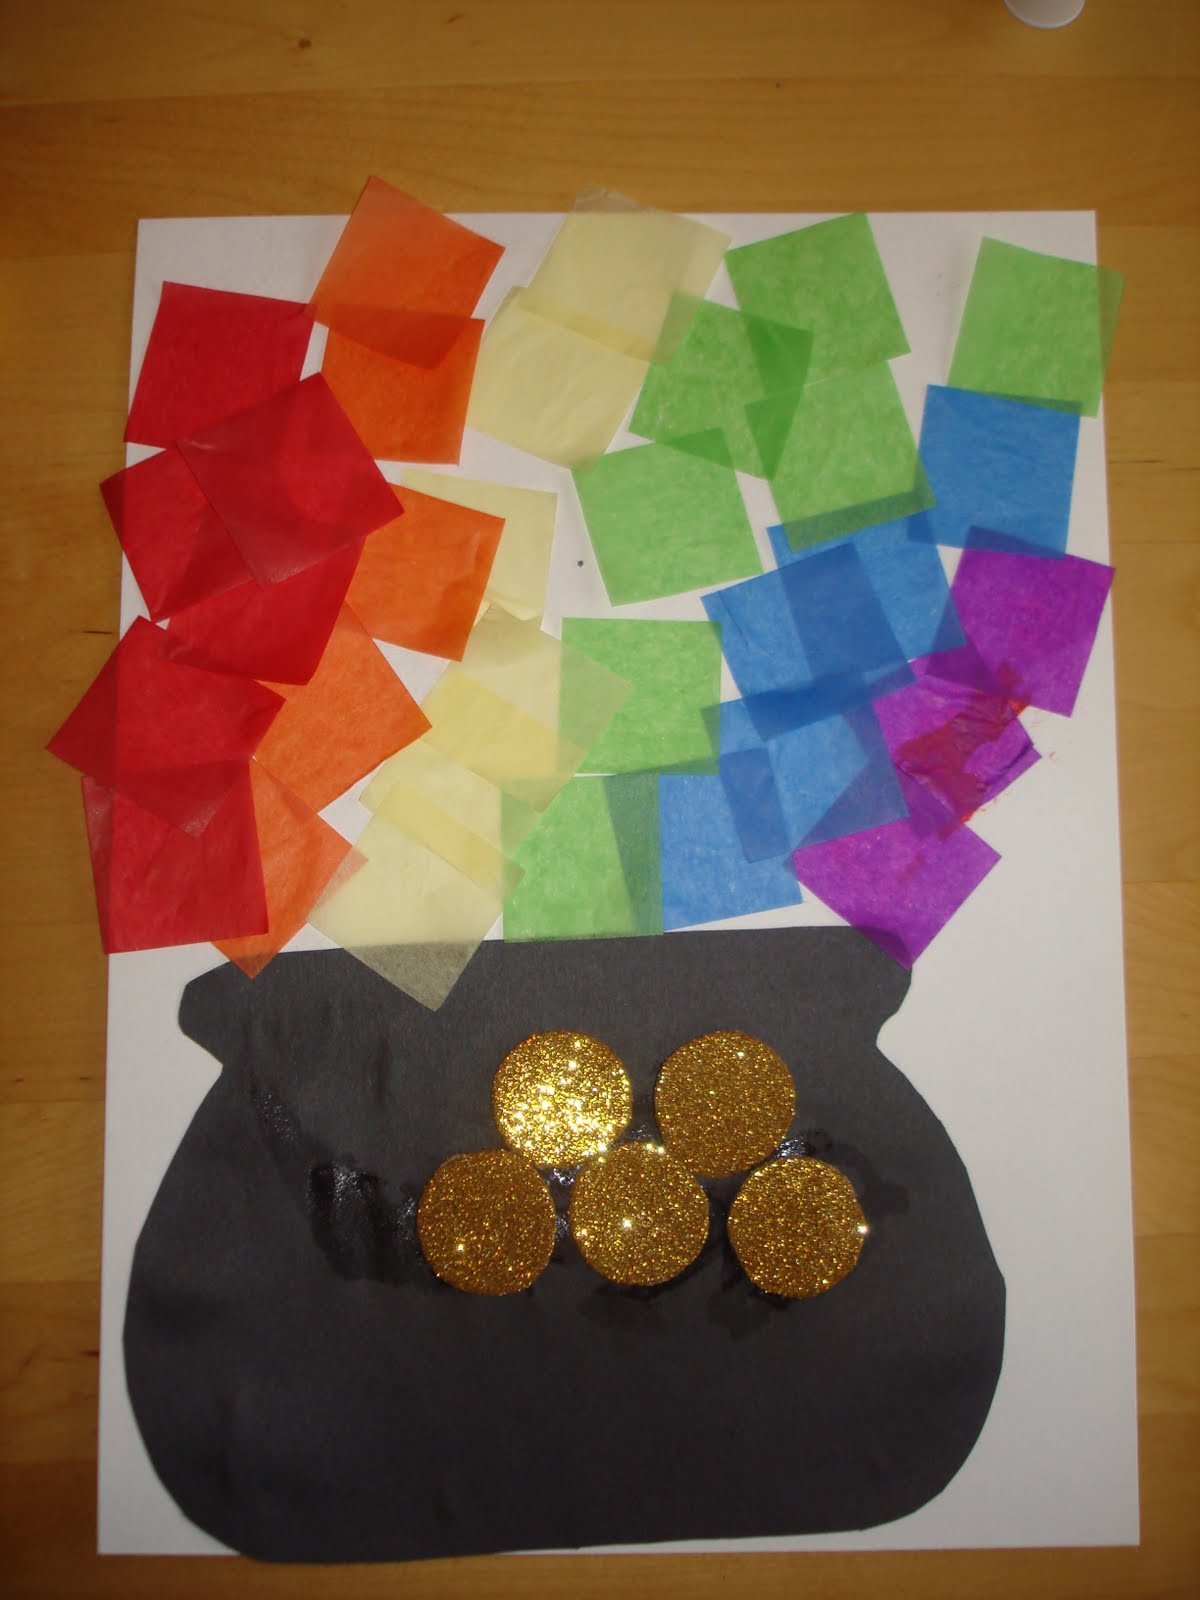 St Patrick Day Craft Ideas
 Preschool Crafts for Kids St Patrick s Day Tissue